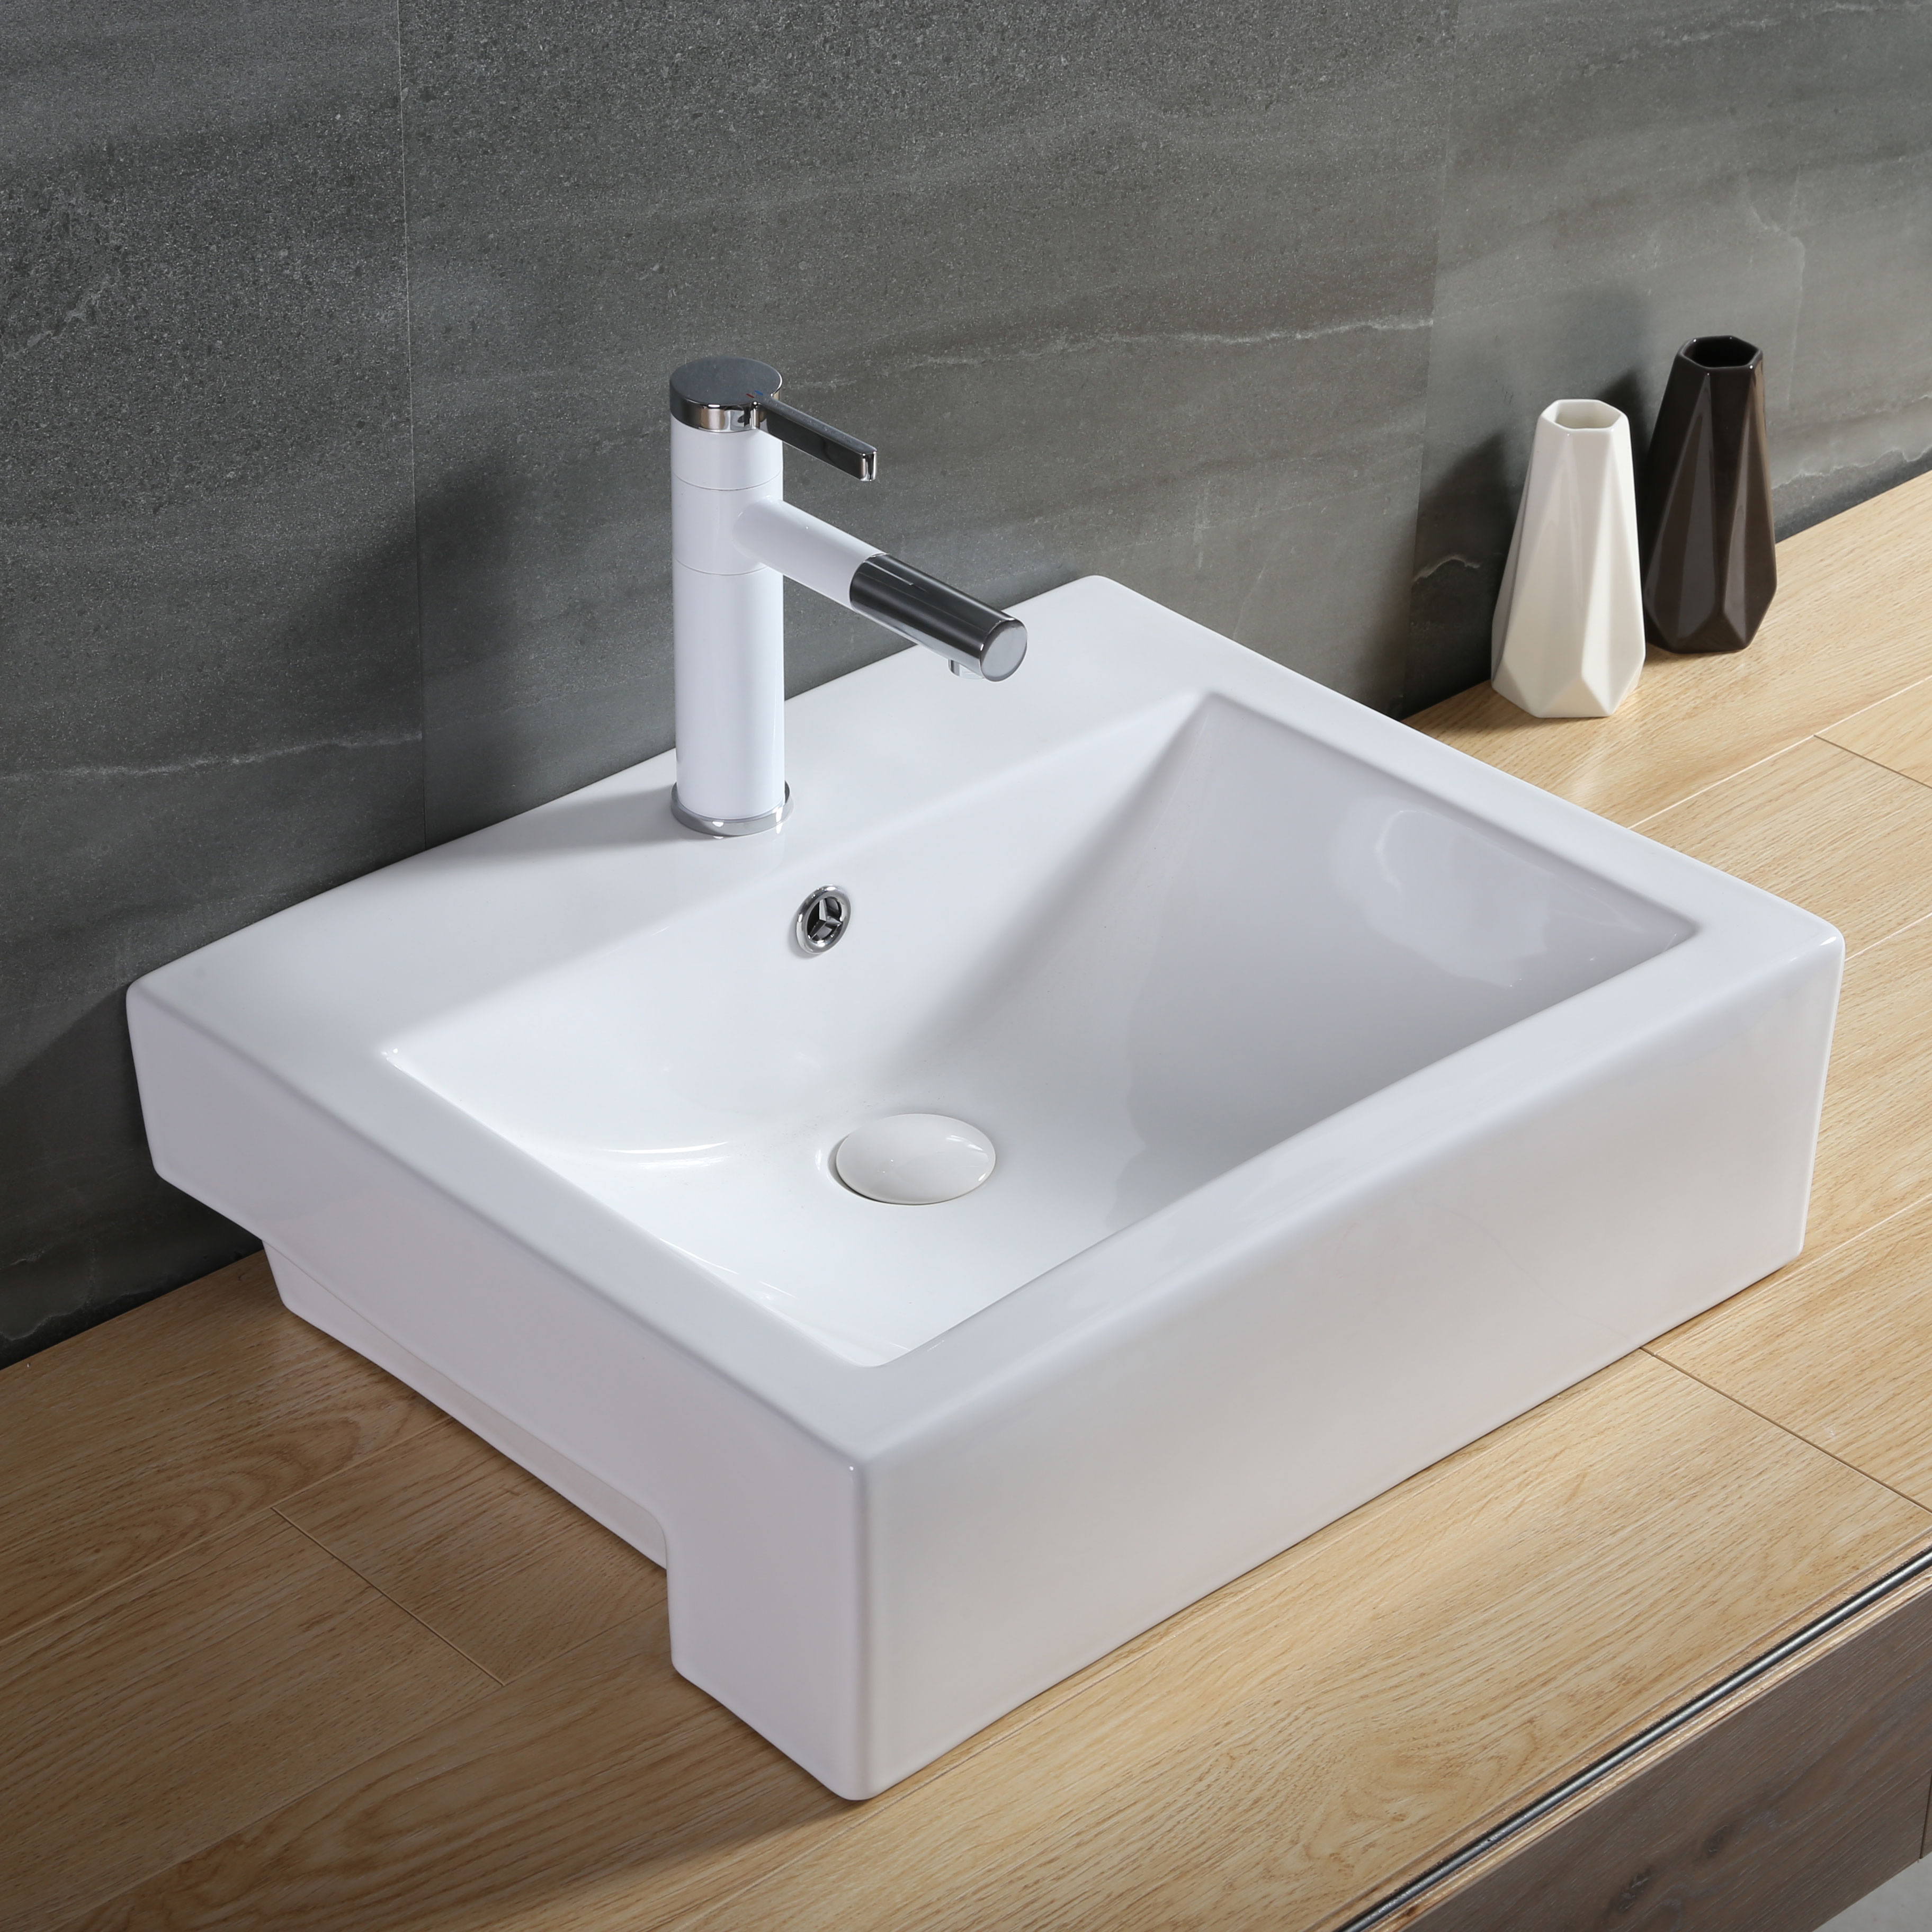 Sanitary Washing Basin Semi Recessed Lavatory Basin With Faucet Hole Ceramic Sink